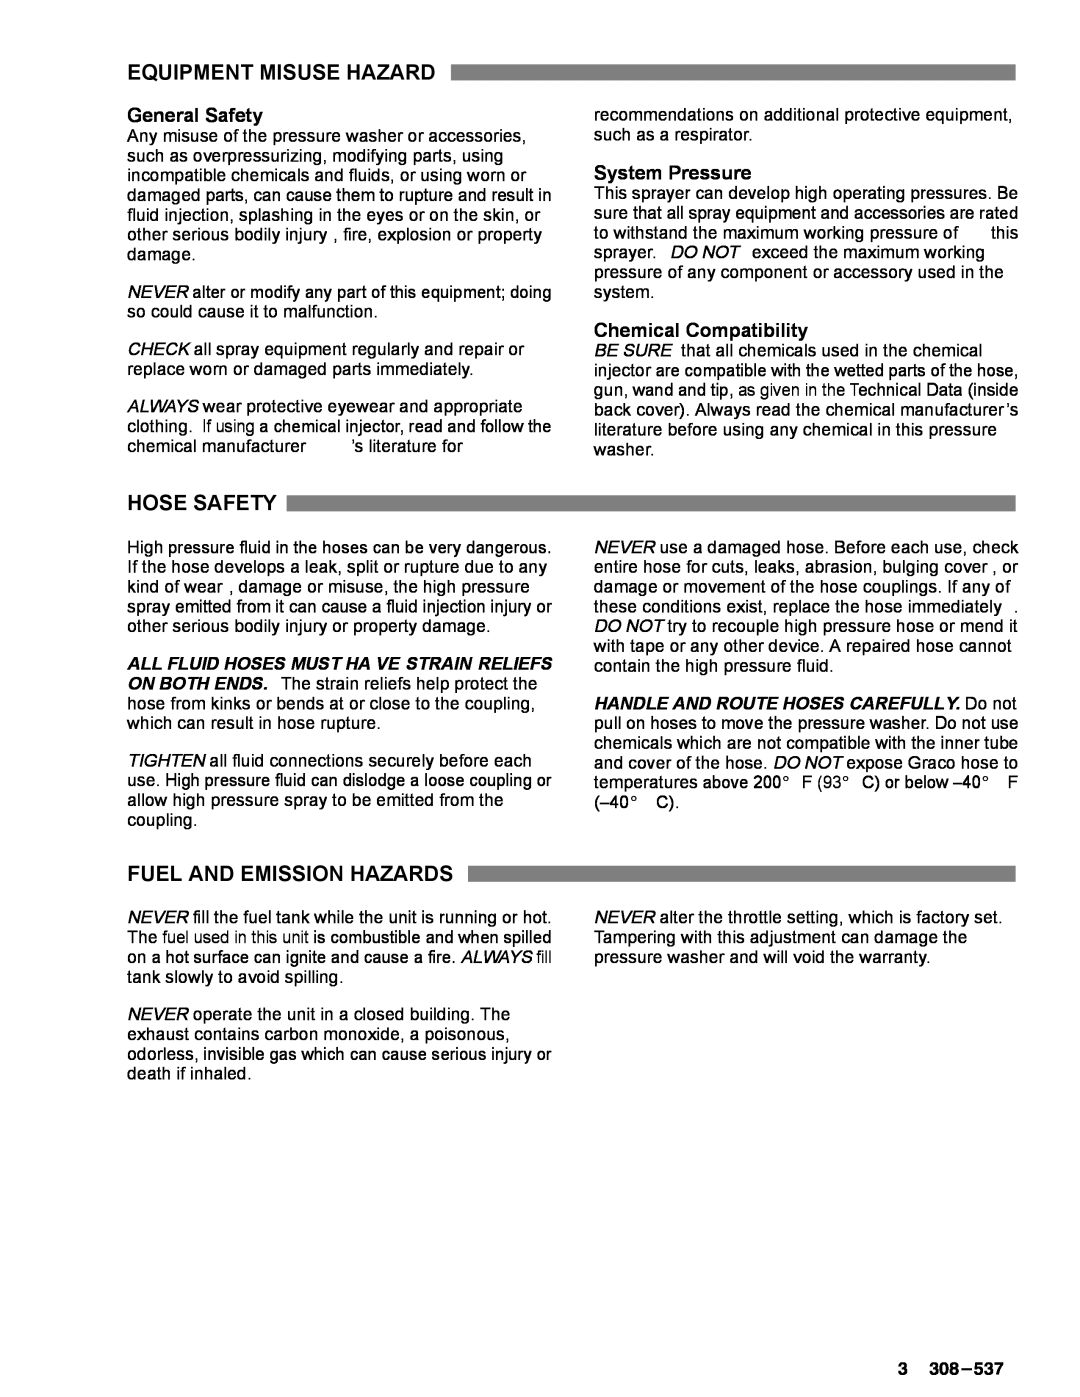 Graco Inc 308-537, 2340 Equipment Misuse Hazard, Hose Safety, Fuel And Emission Hazards, General Safety, System Pressure 